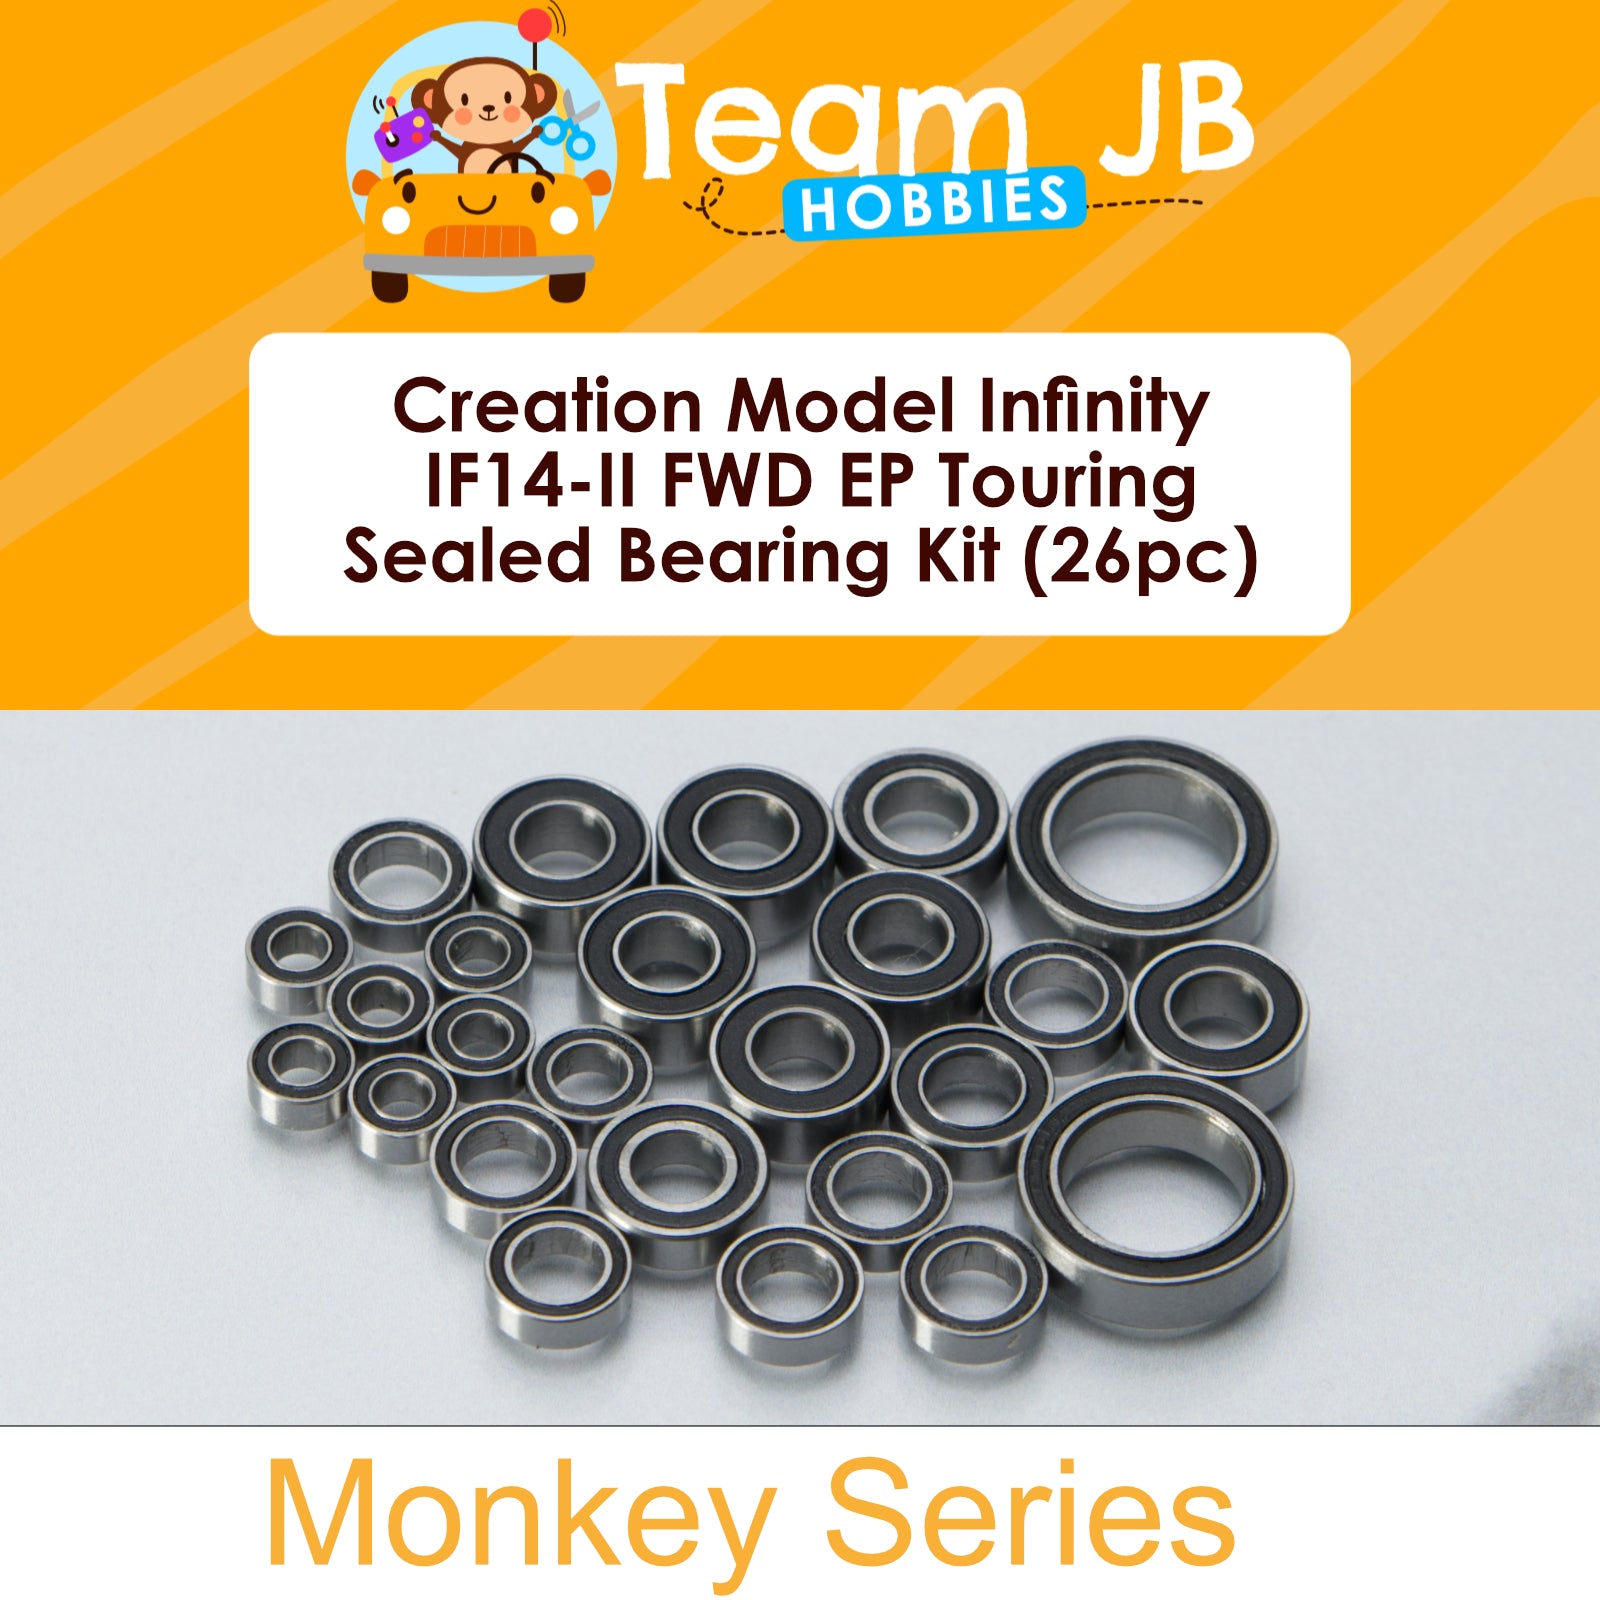 Creation Model Infinity IF14-II FWD EP Touring - Sealed Bearing Kit